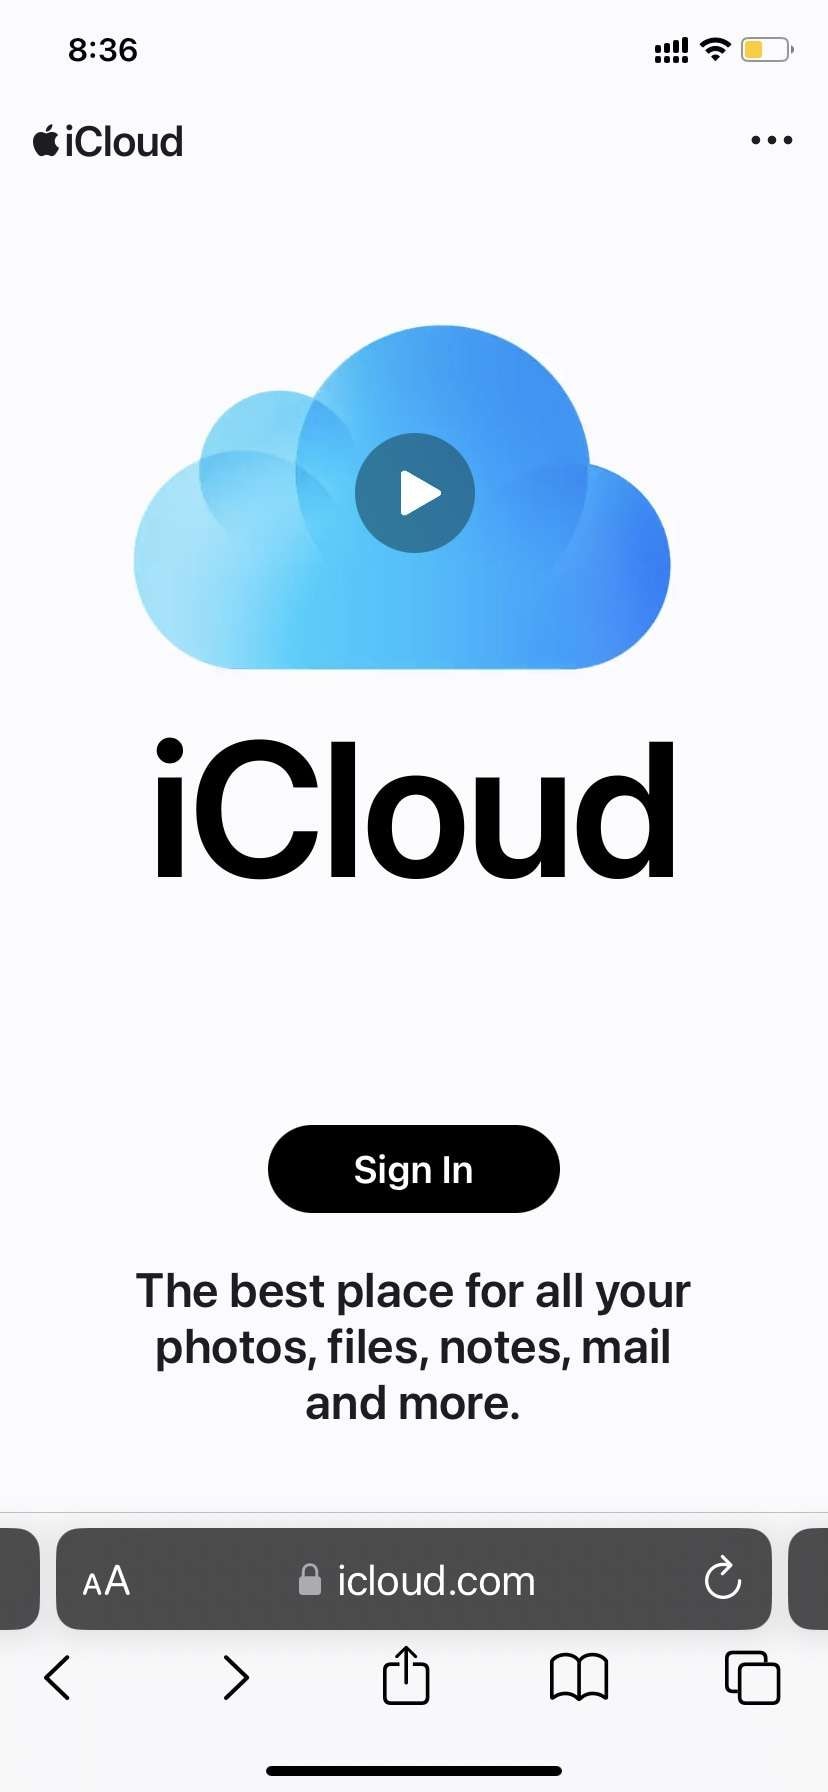 Open the iCloud website in your browser.